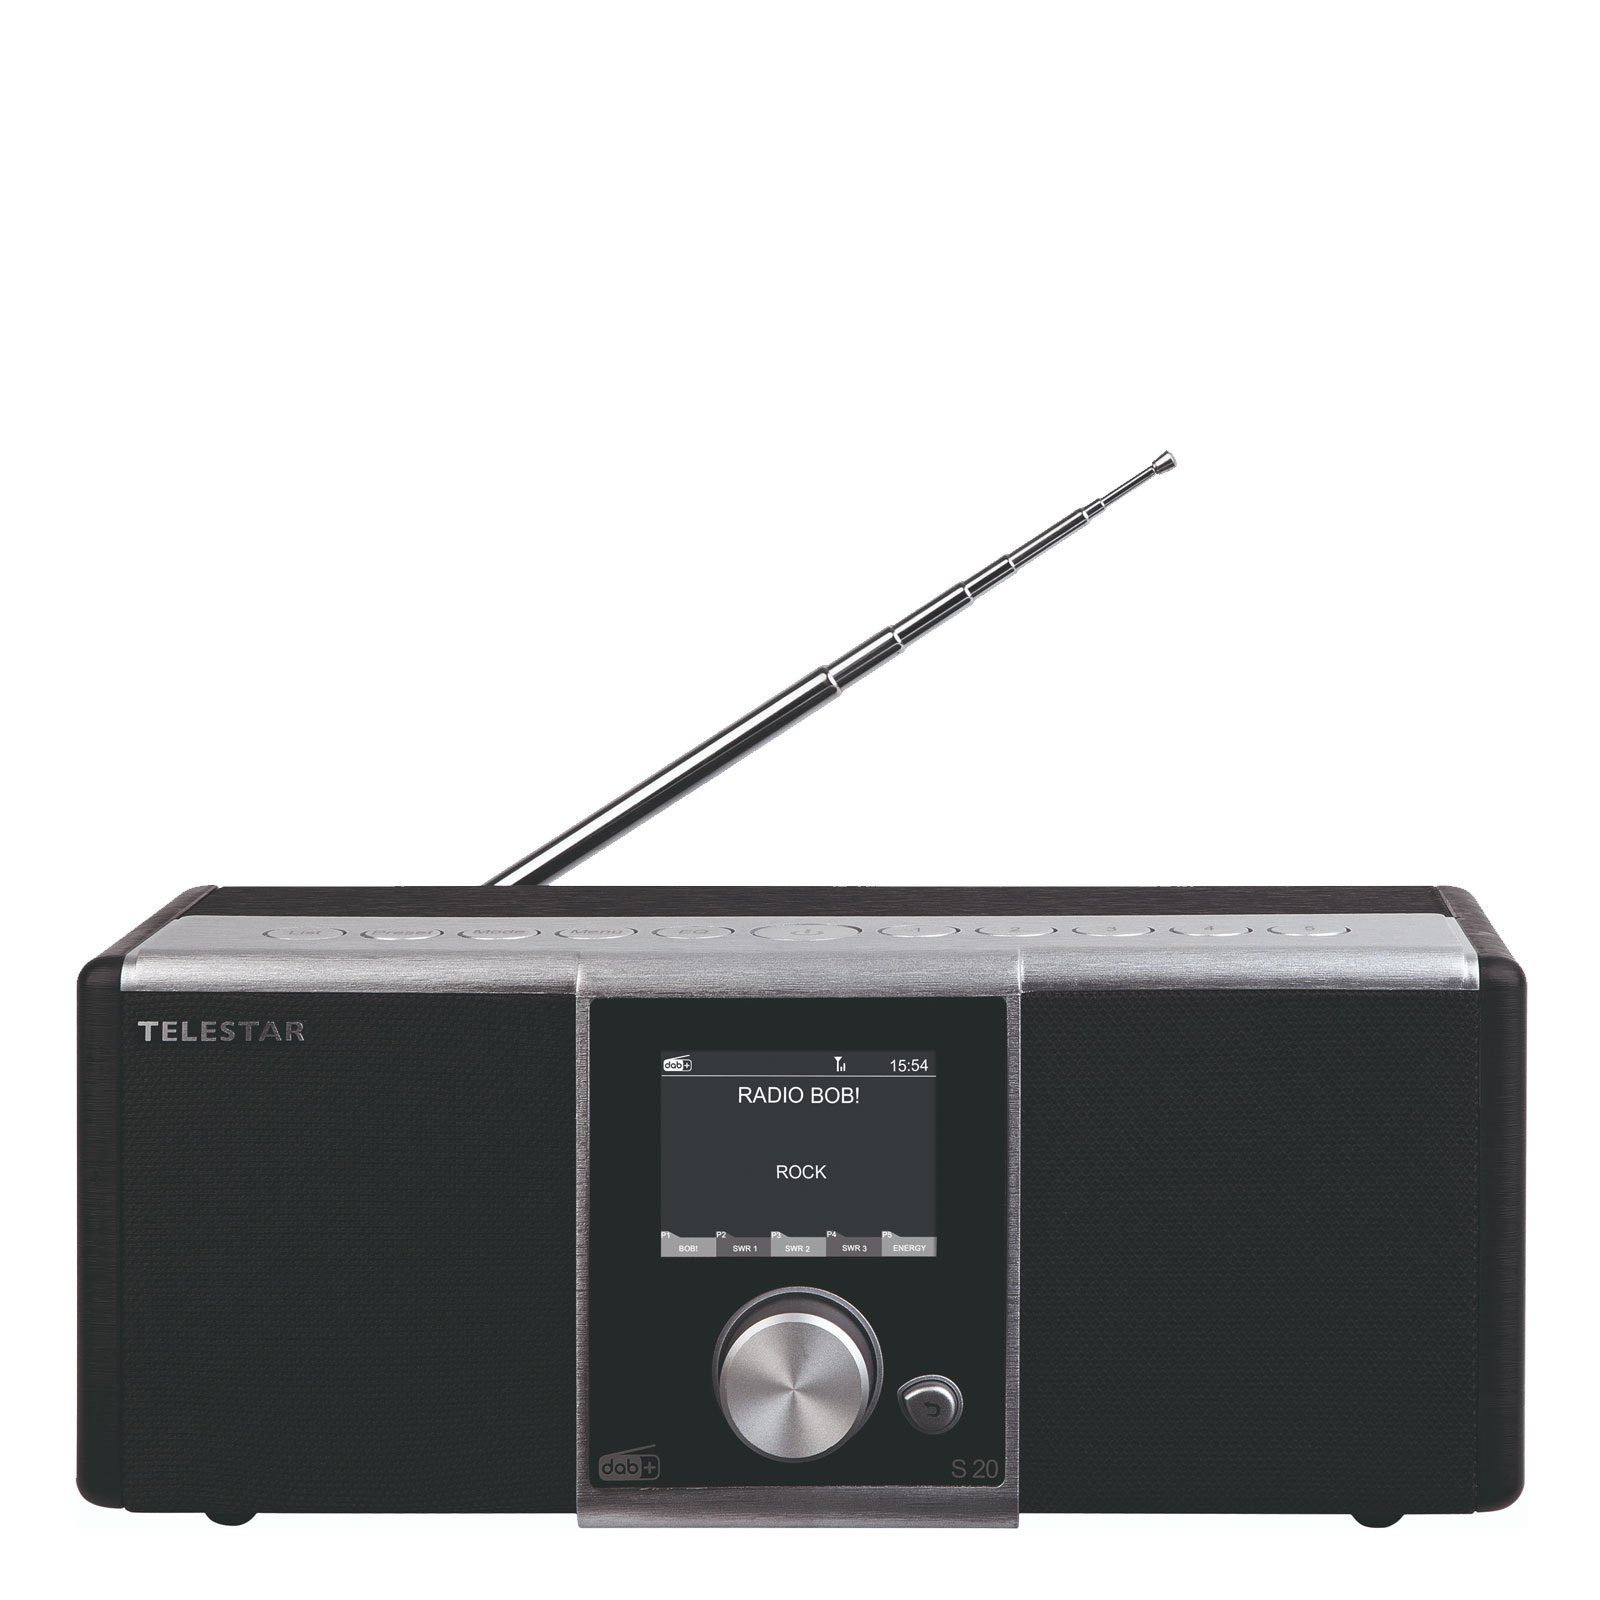 TELESTAR S 20 Digitalradio Wecker 30 (DAB) Direktwahltasten) Farbdisplay, DAB+/DAB/UKW UKW Stereo W, Radio, (DAB+, Favoritenspeicher Digitalradio